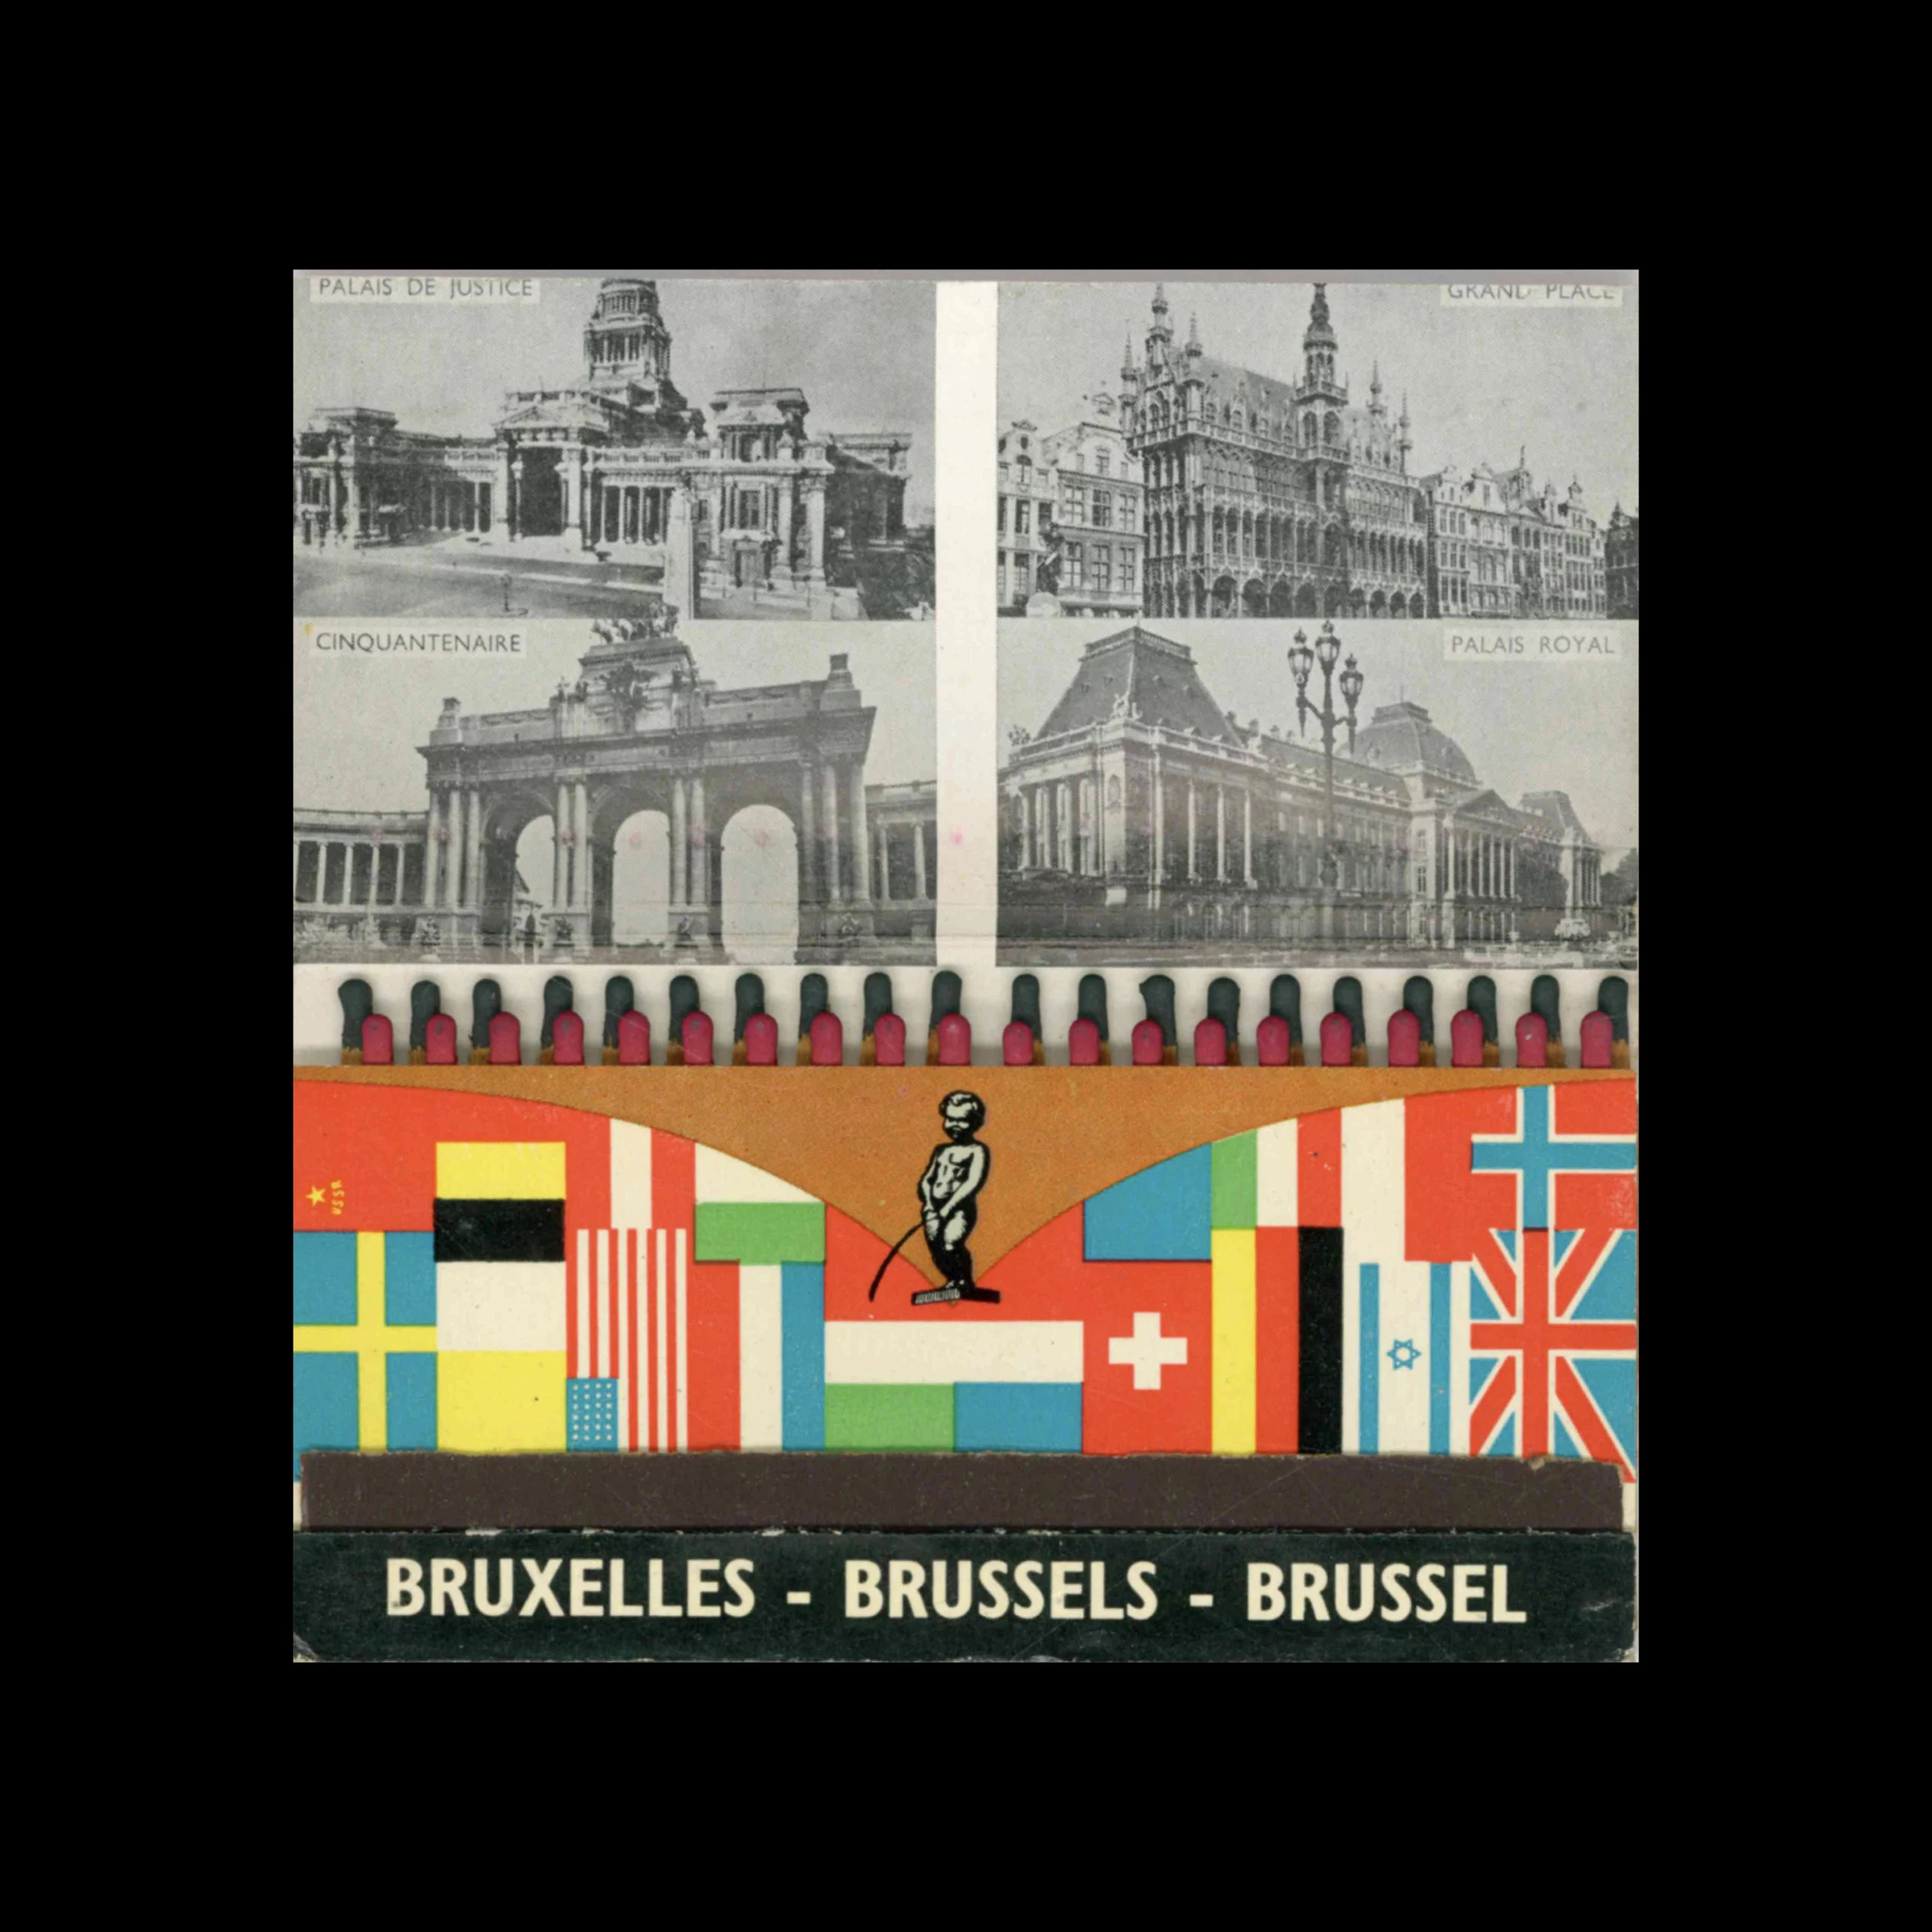 Brussels Matchbox, c.1960s